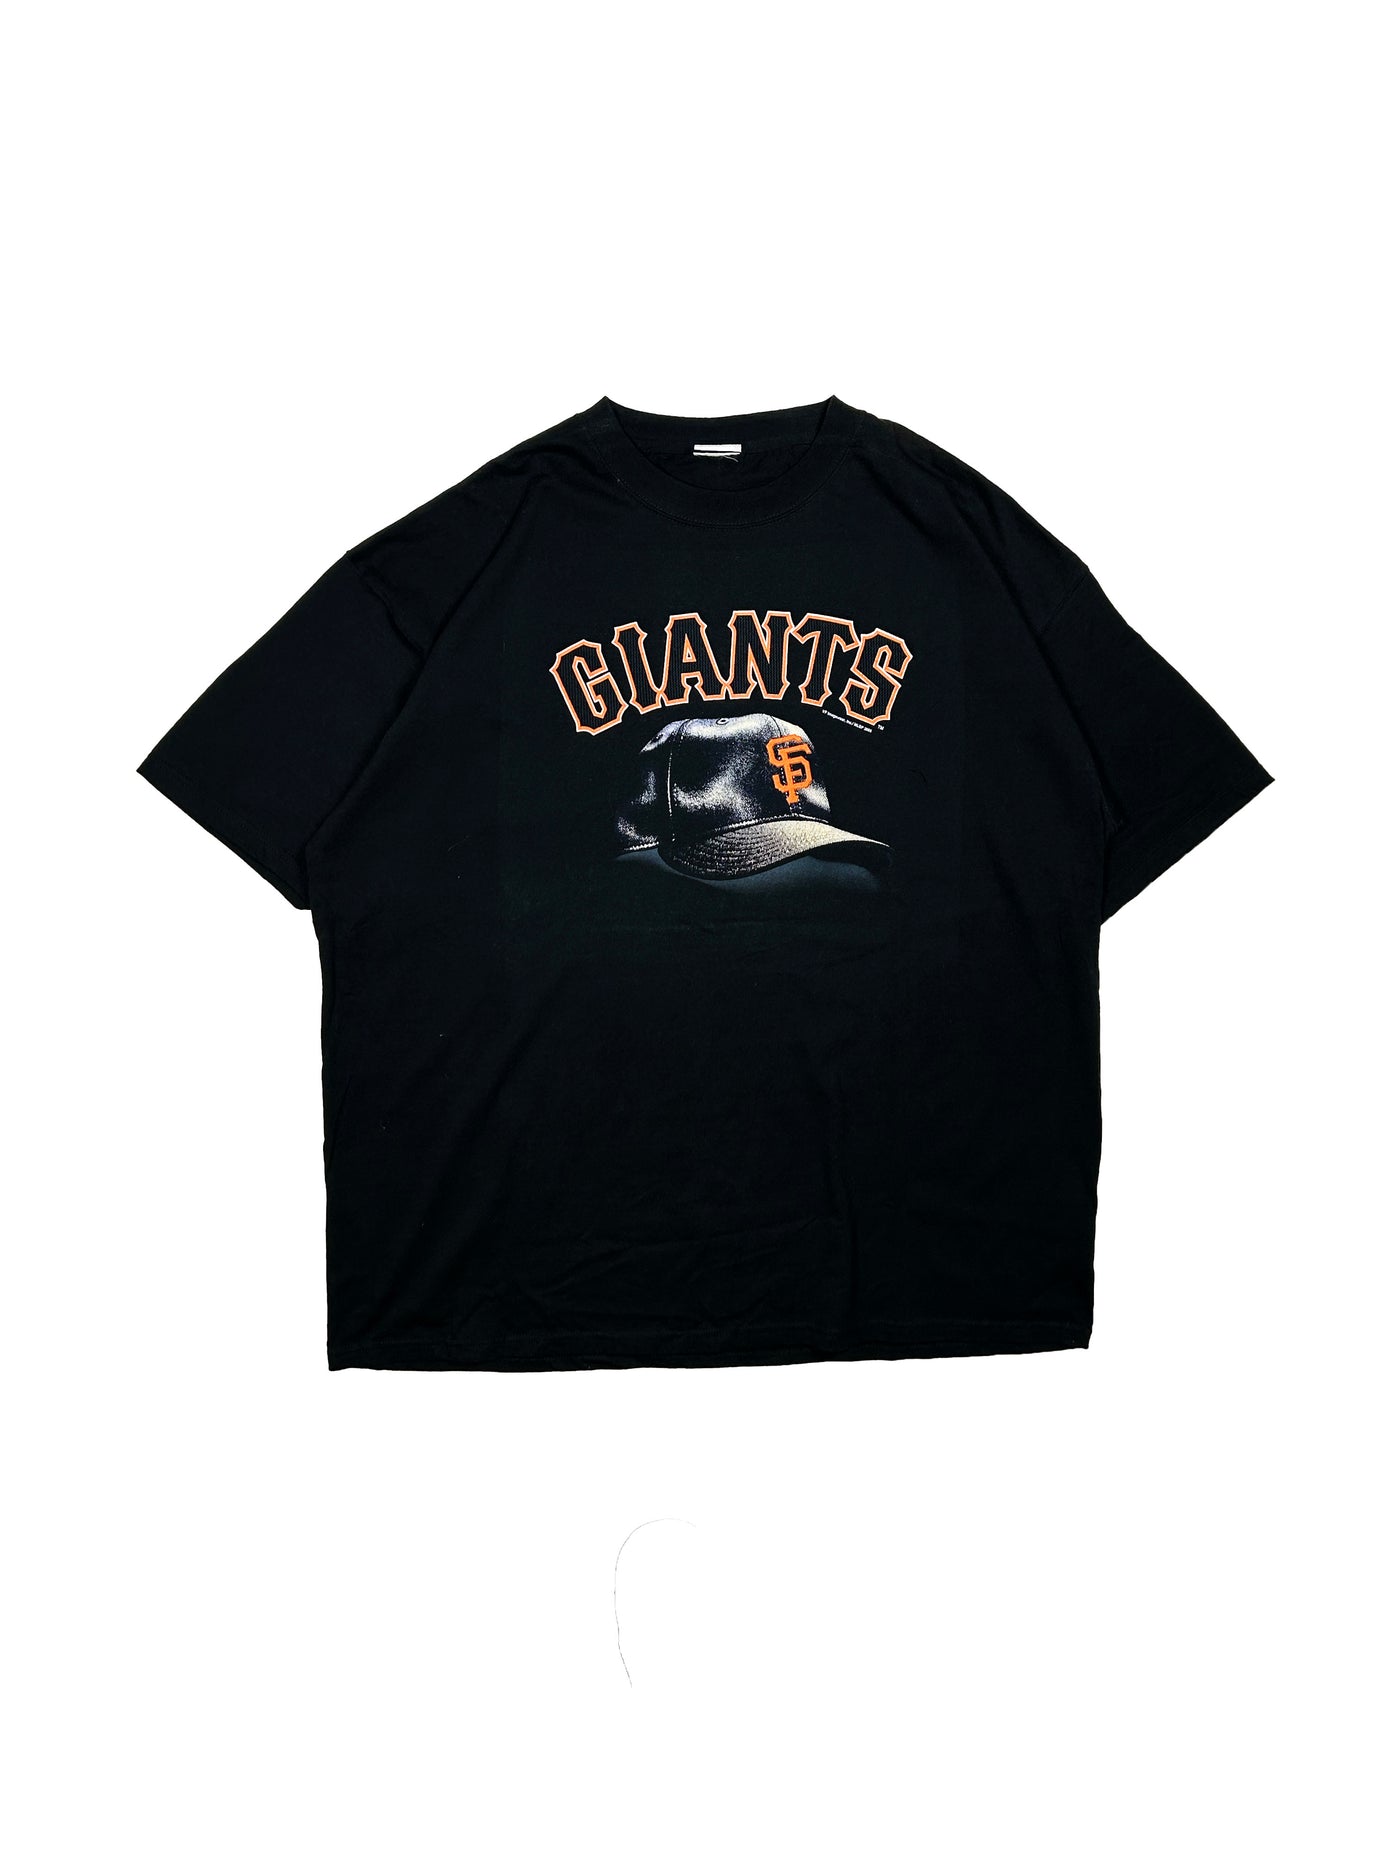 2005 San Francisco Giants T-Shirt